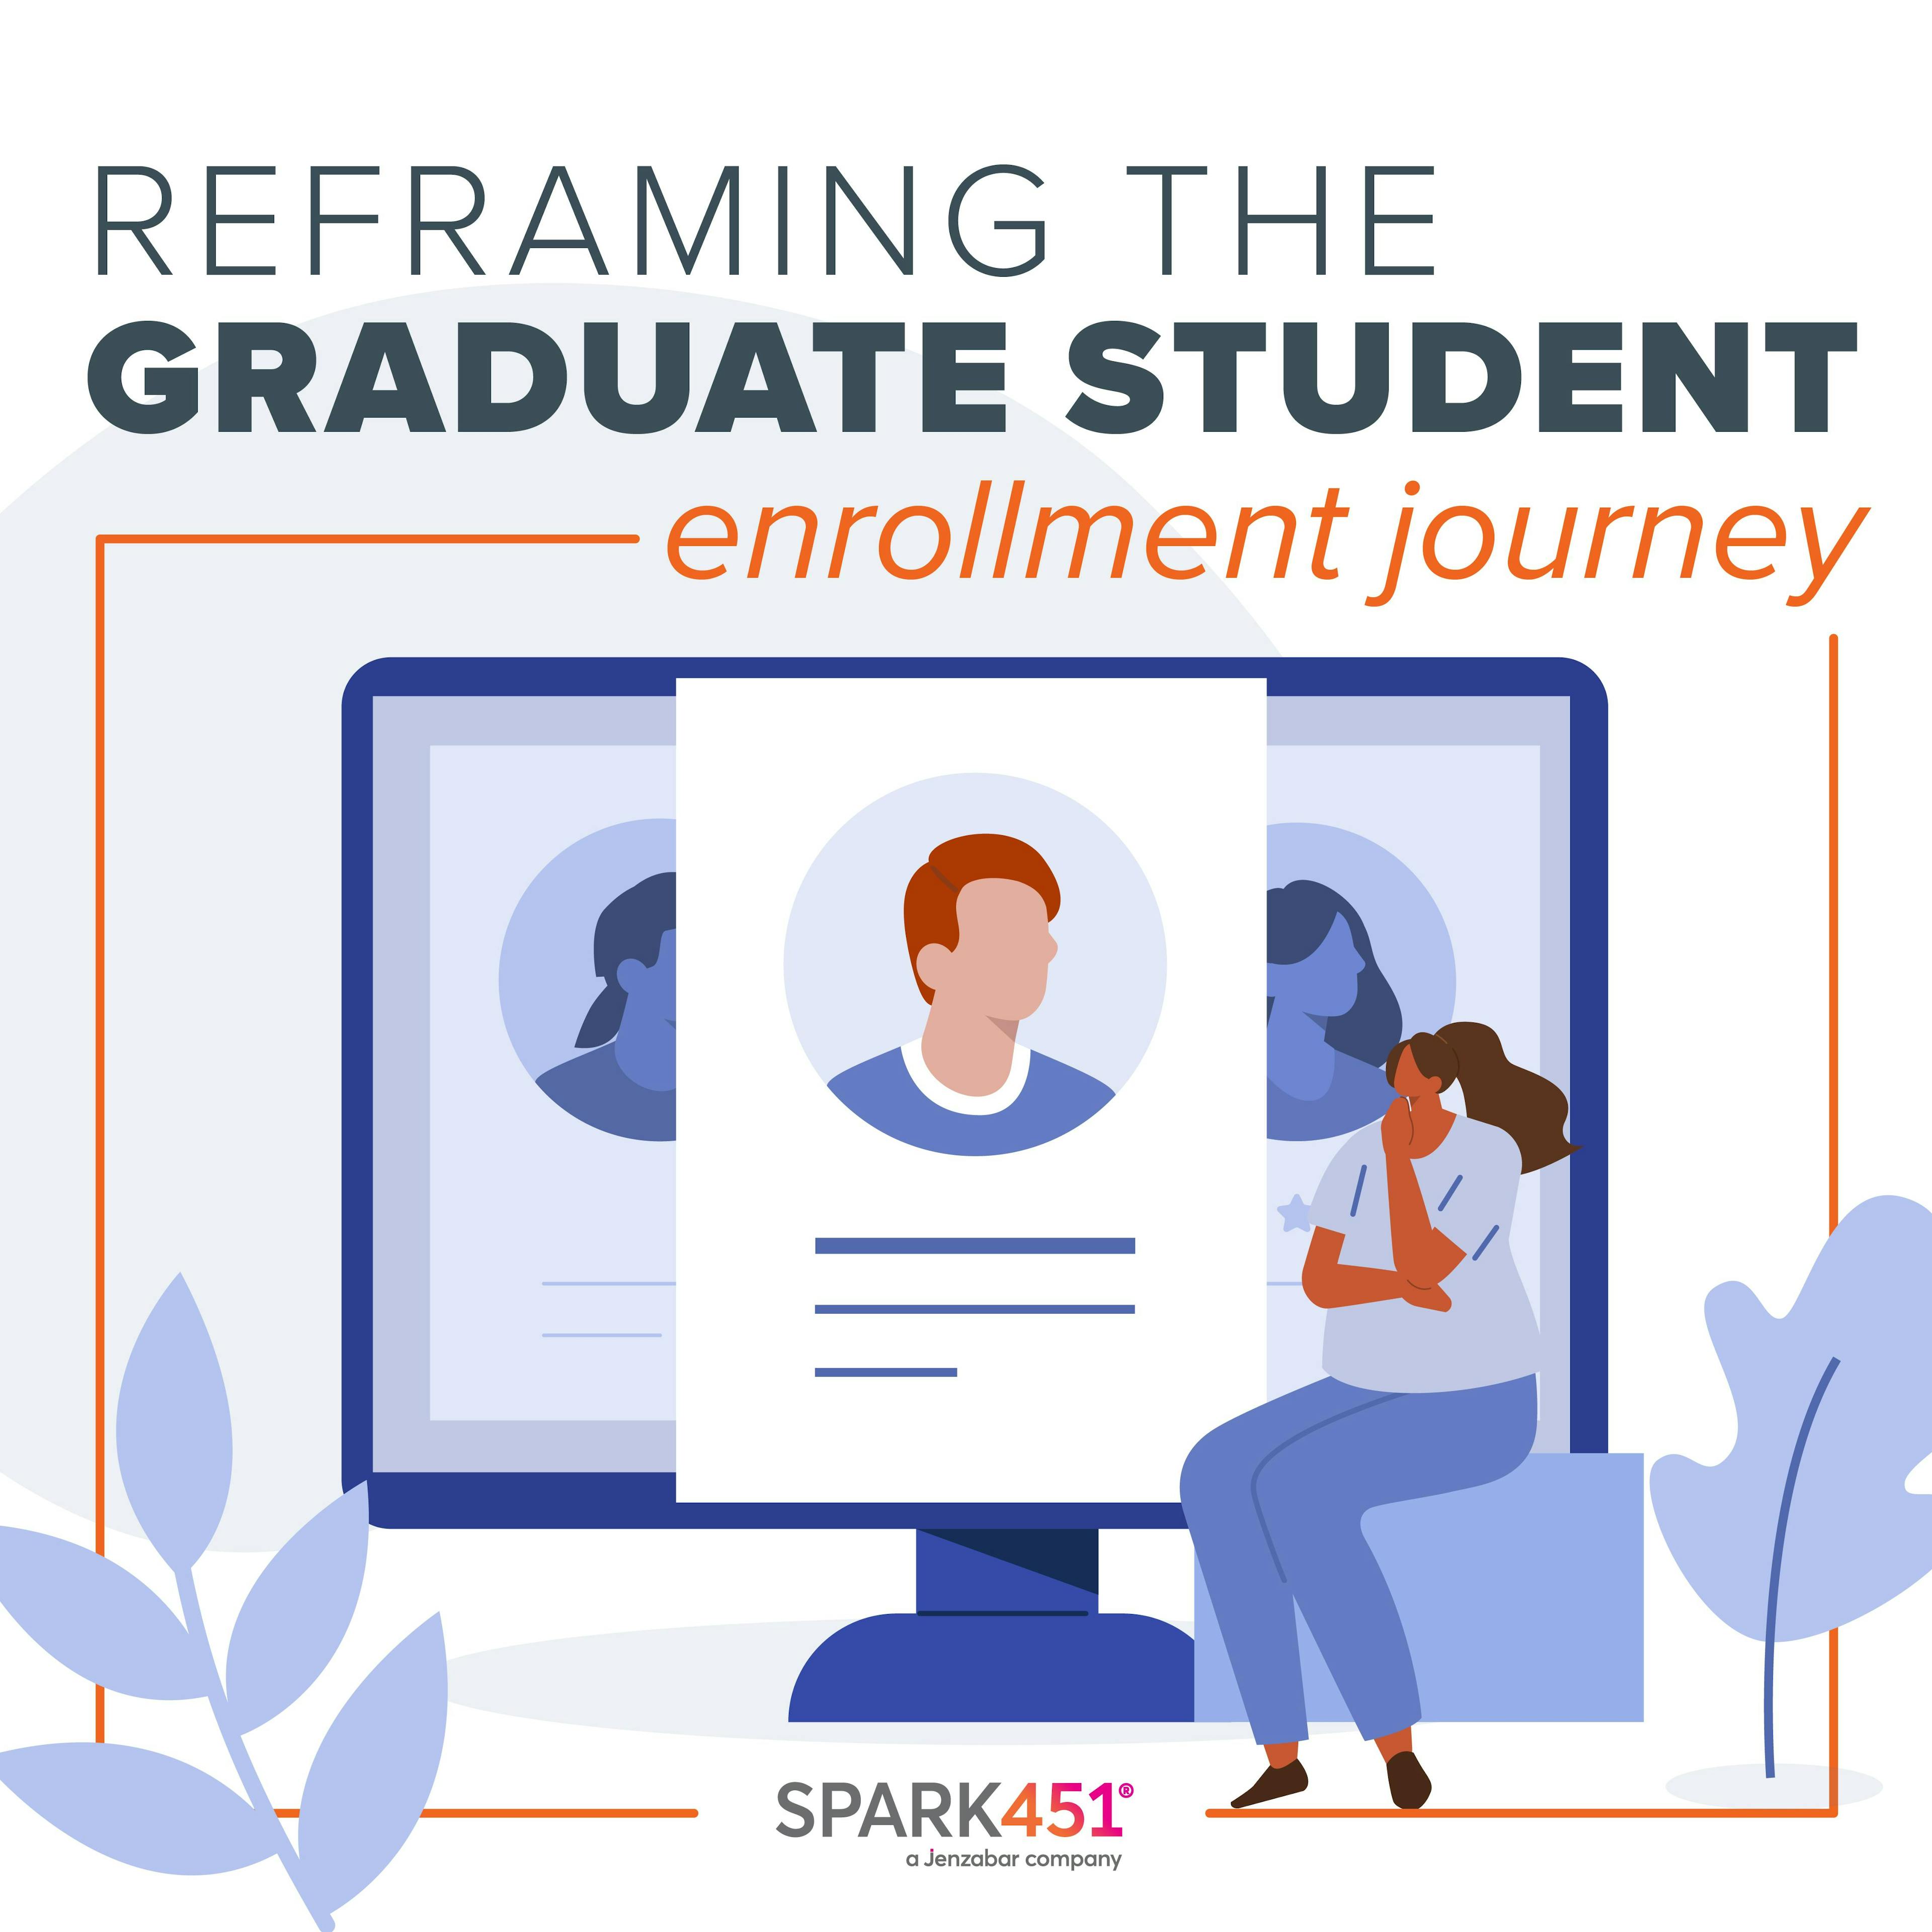 Blog: Reframing the Graduate Student Enrollment Journey